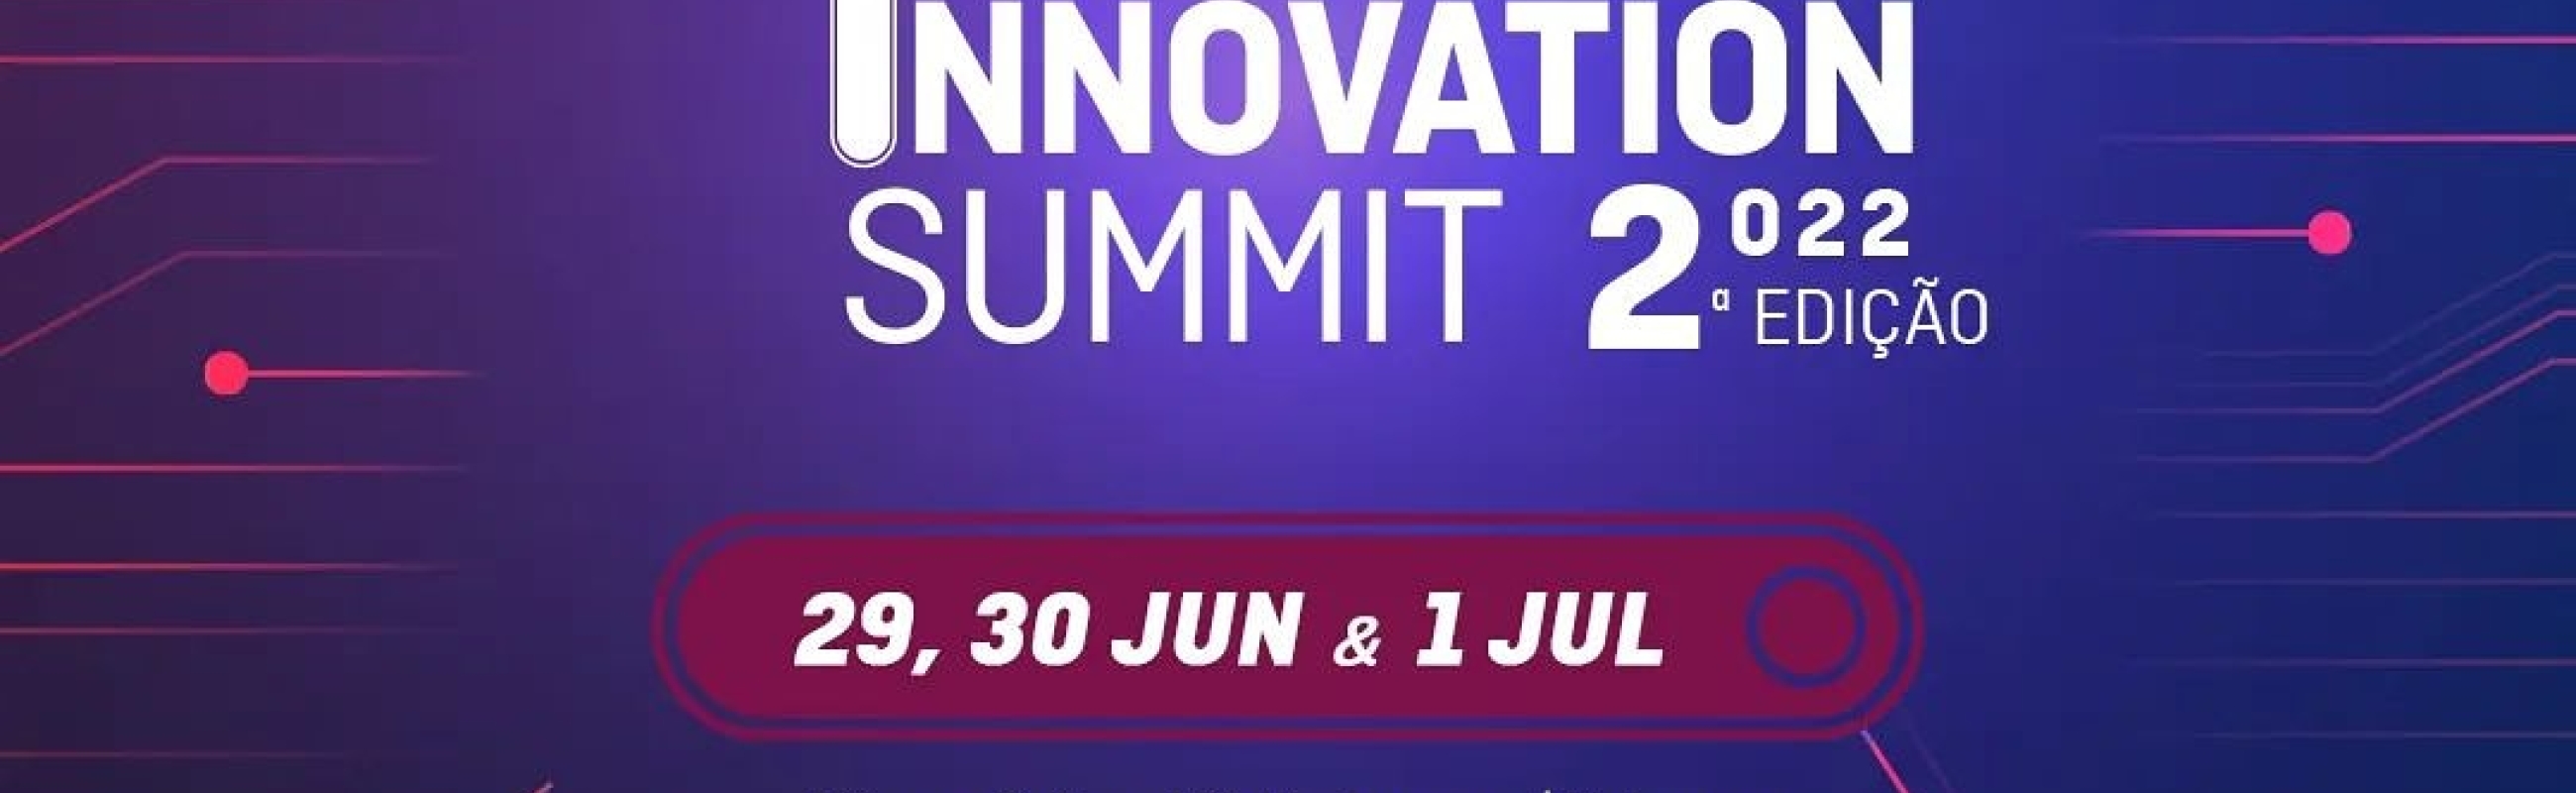 Switch to Innovation Summit Valongo 2022